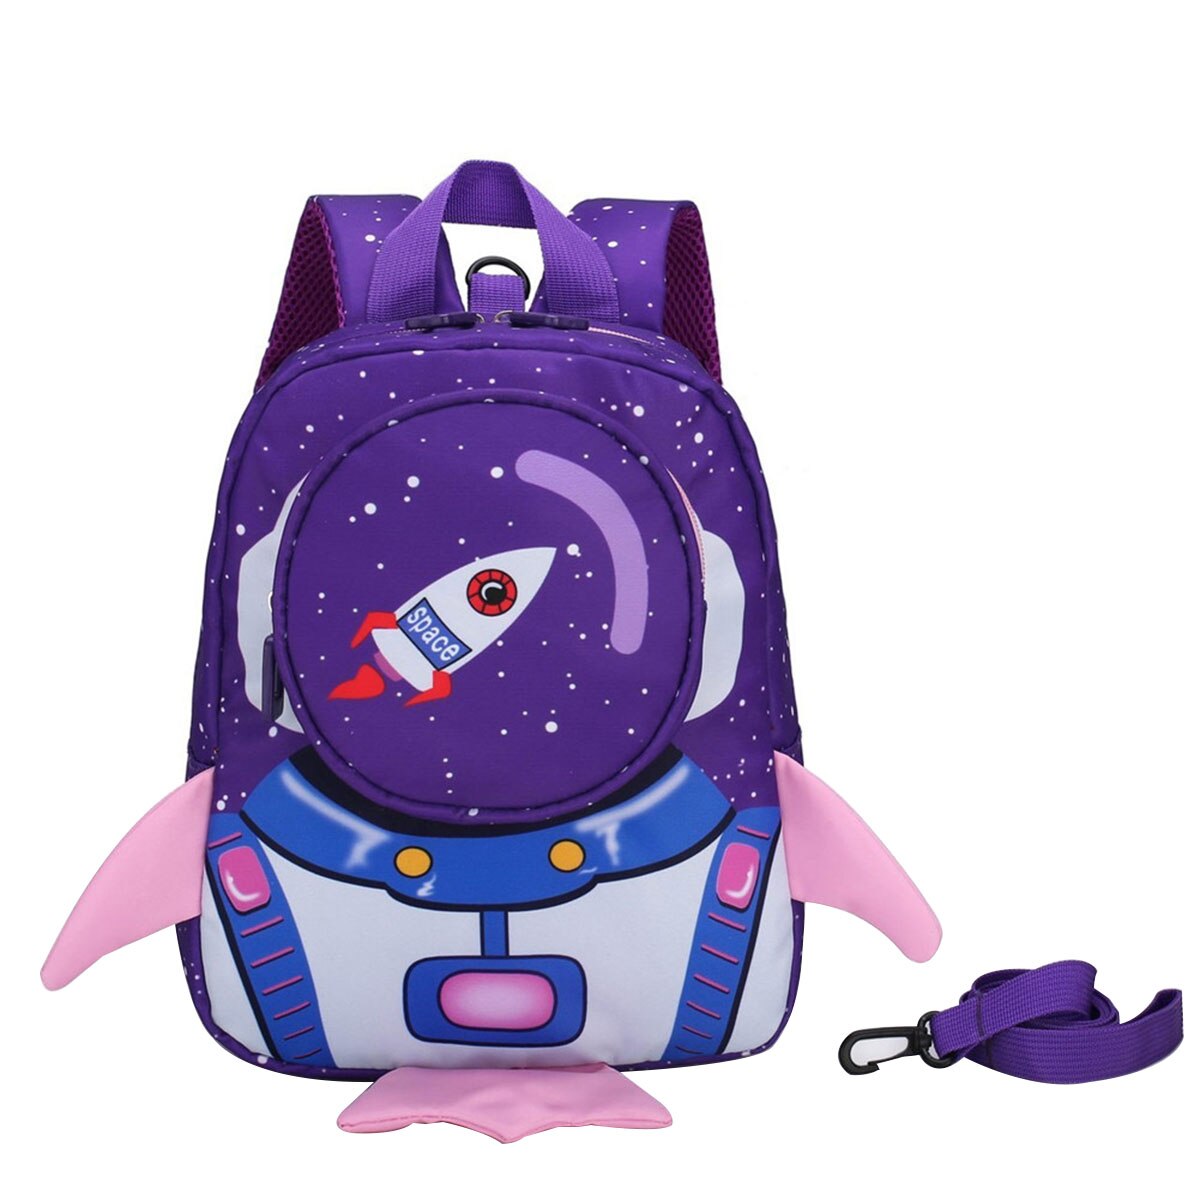 Toddler baby baby boy girl school bag space raket print børnehave rygsæk kid skuldertaske sød: Lilla